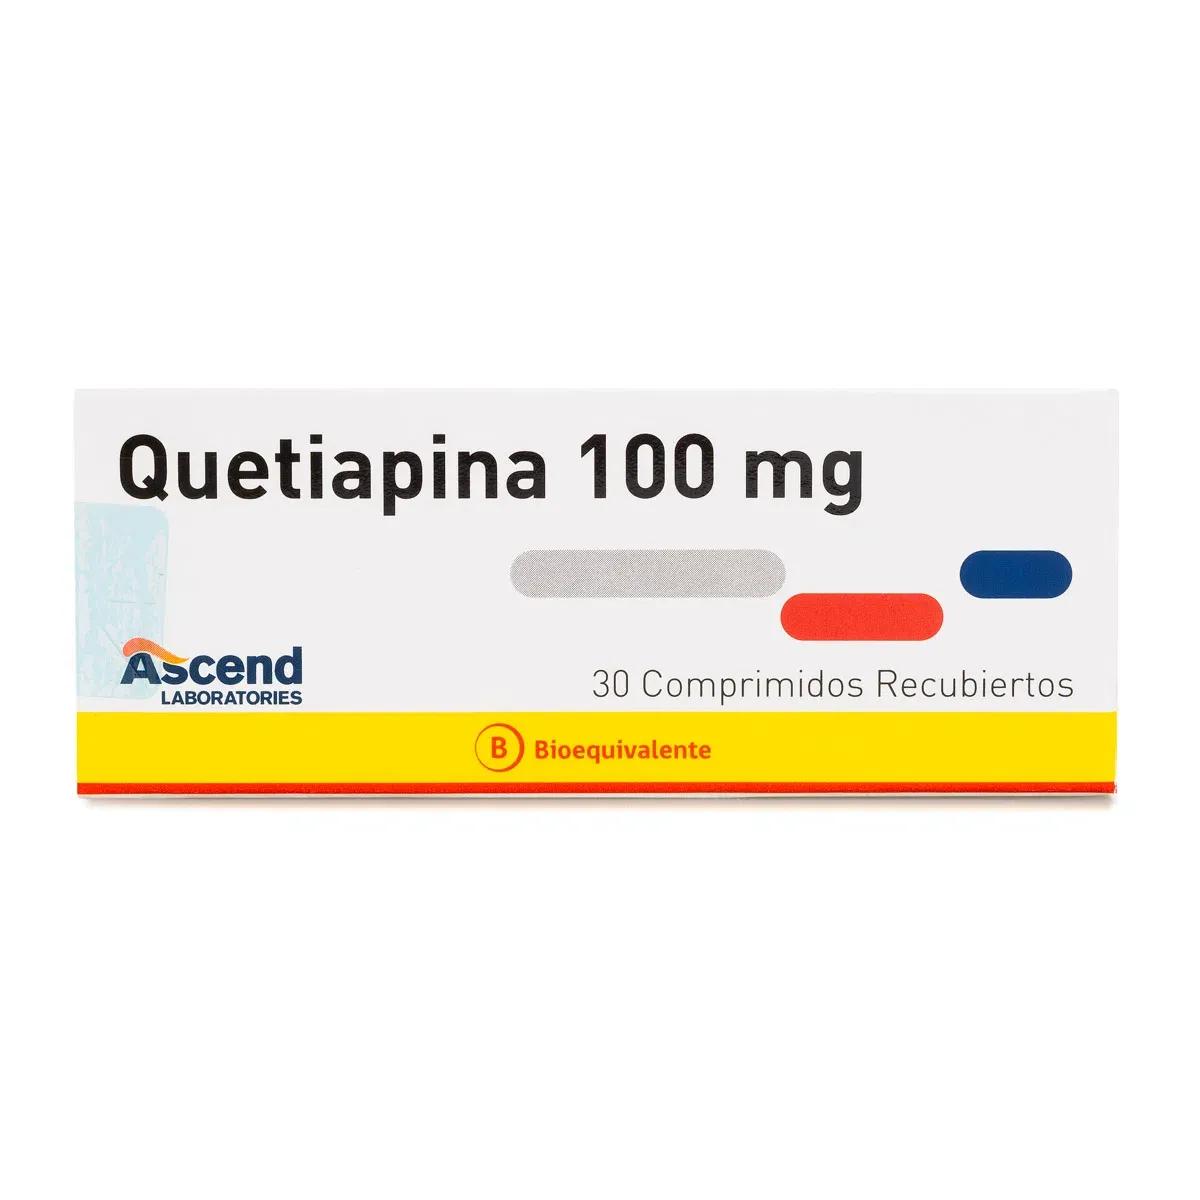 Butrino (Anfebutamona Clorhidrato / Bupropion) 150 mg. - Eurofarma